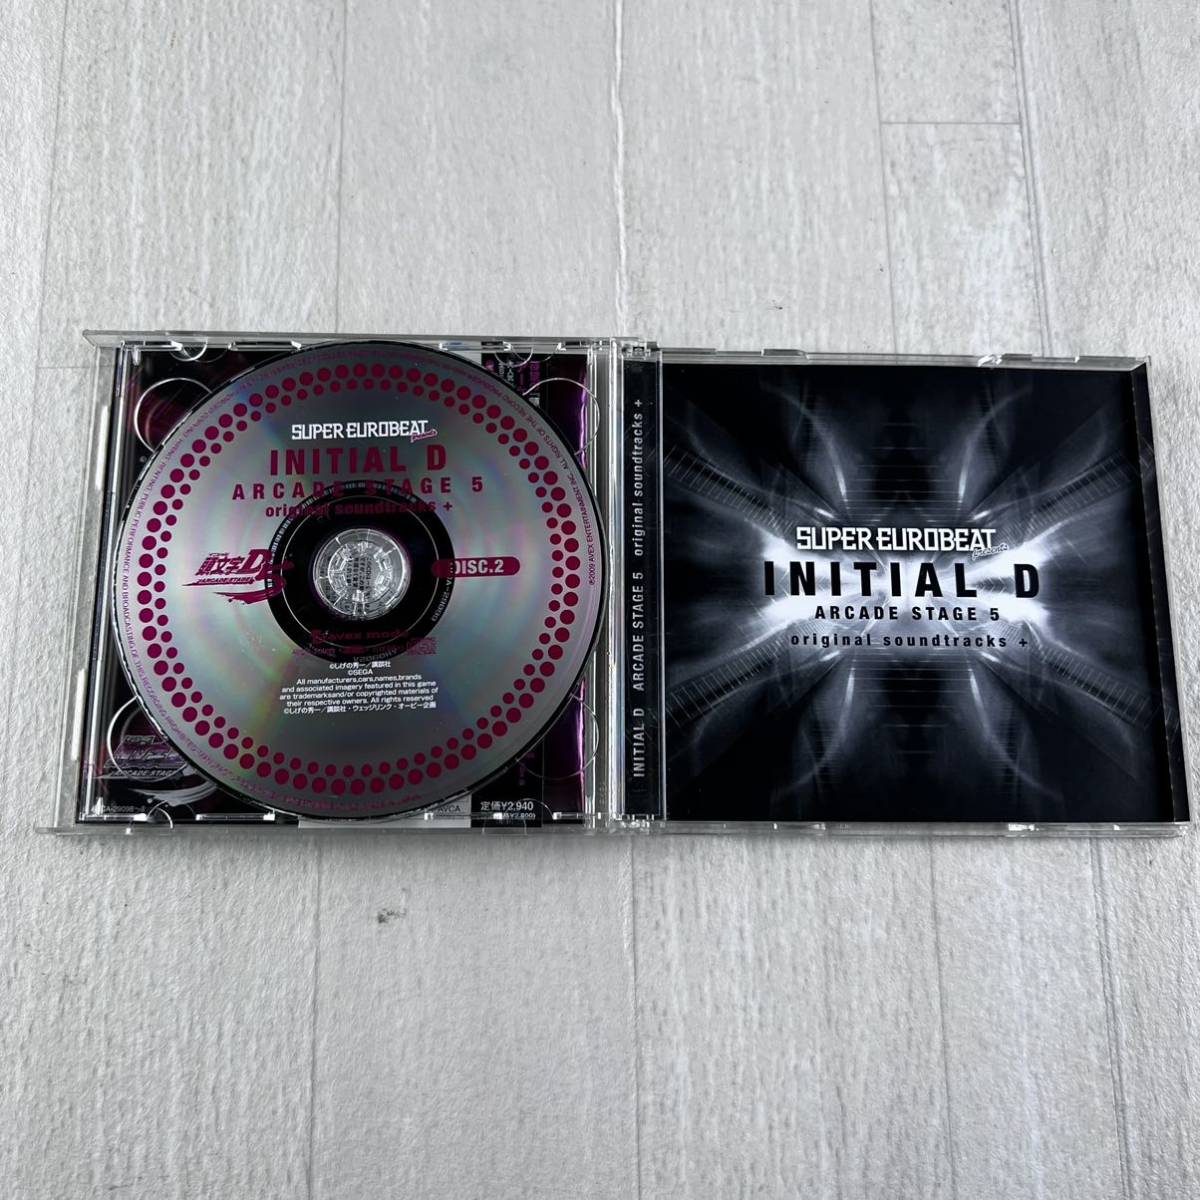 C4 SUPER EUROBEAT presents инициалы D ARCADE STAGE 5 оригинал саундтрек CD INITIAL D ARCADE STAGE 5 original soundtracks